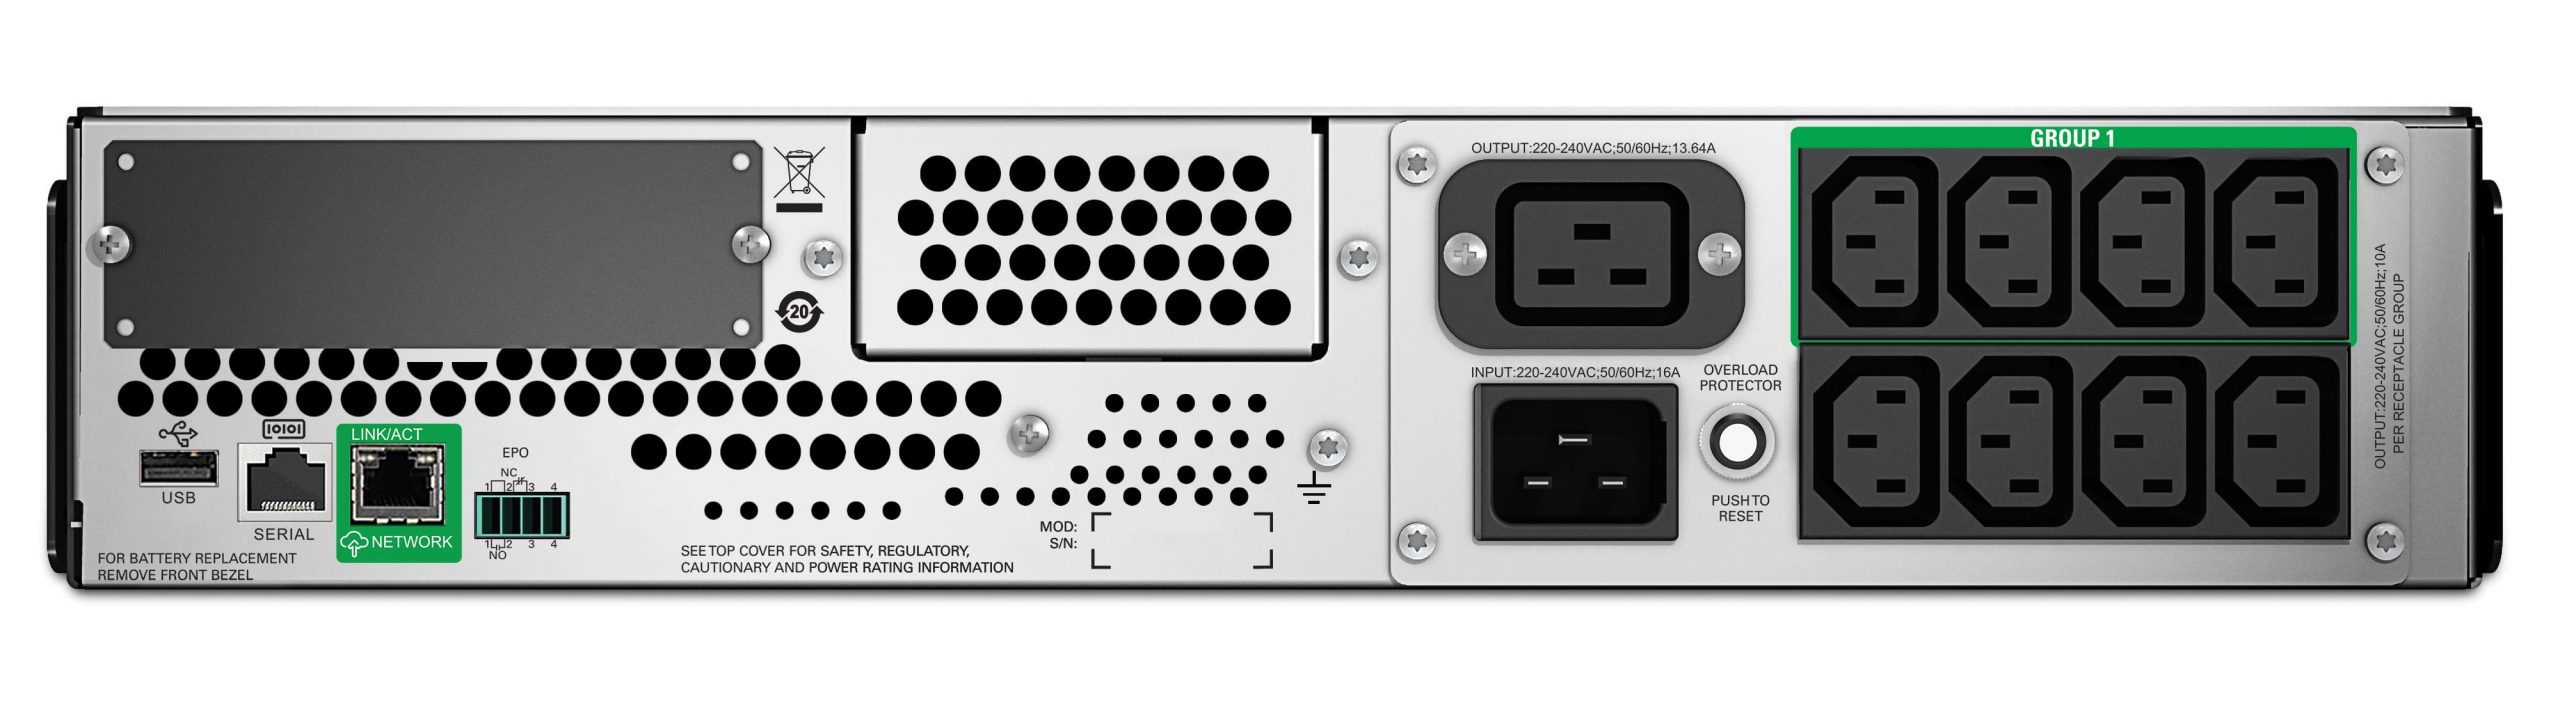 APC Smart-UPS 2200 VA, RM, 2U, 230 V Gruppo di continuità professionale Rack 2 Unità